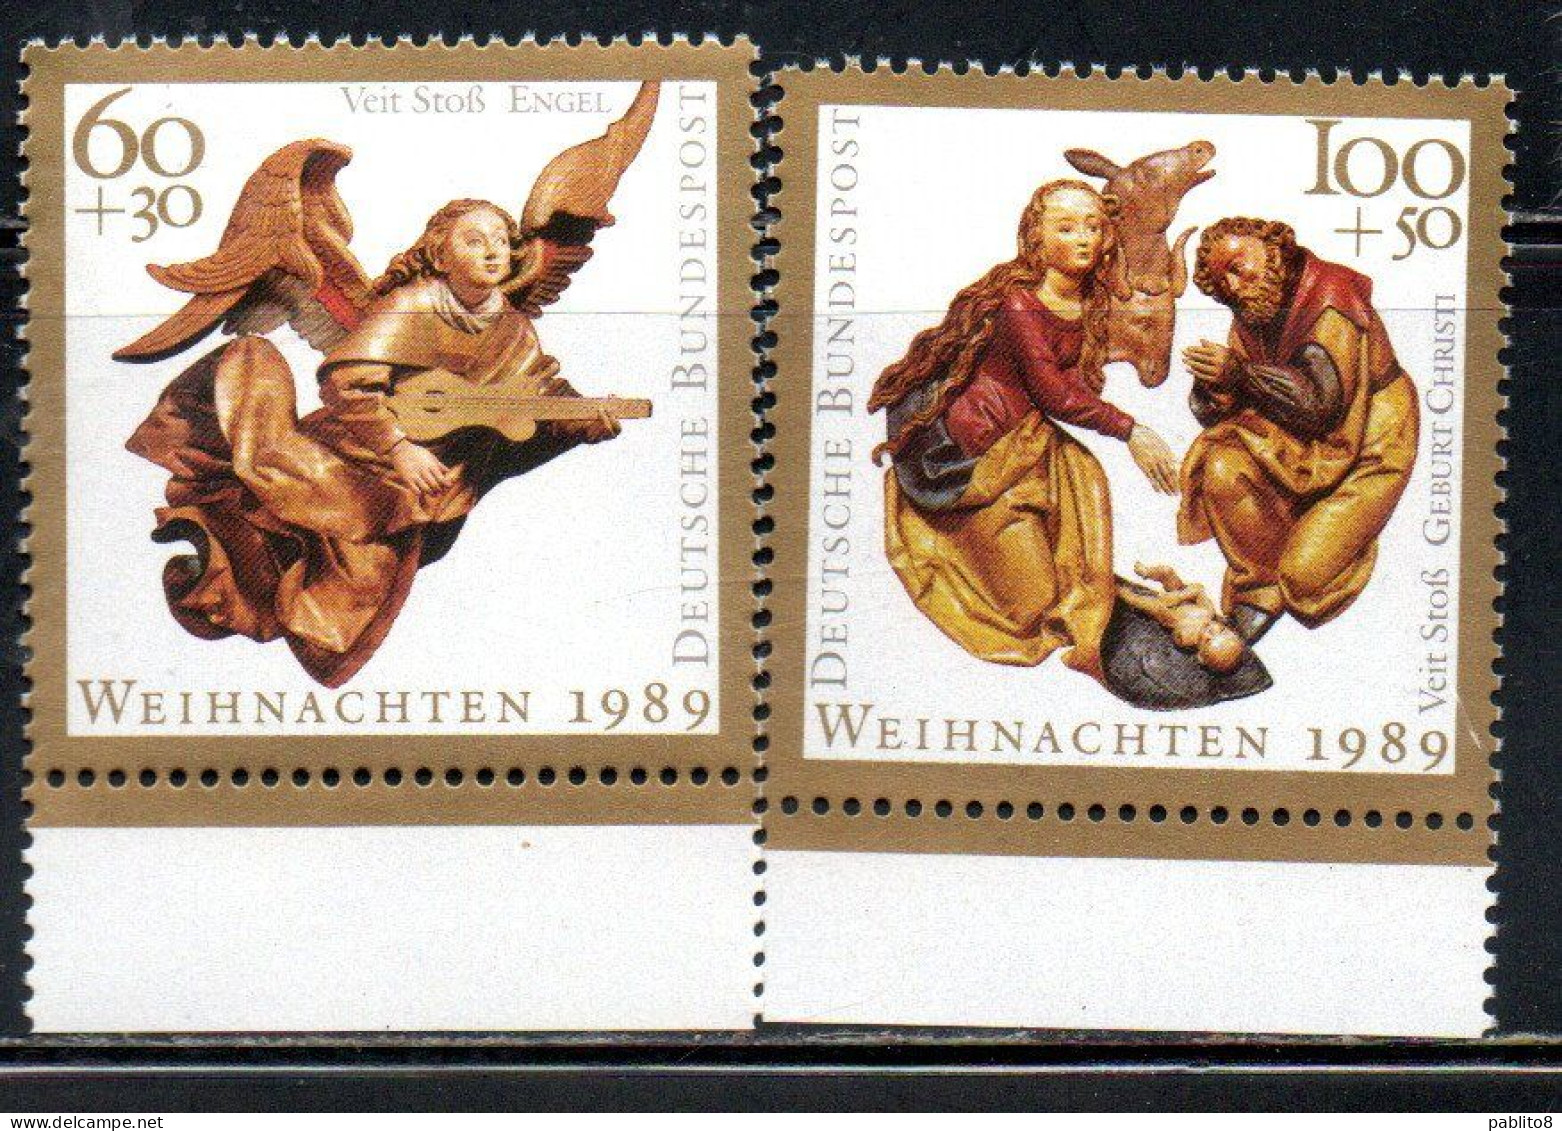 GERMANY GERMANIA ALLEMAGNE 1989 CHRISTMAS WEIHNACHTEN NATALE NOEL NAVIDAD COMPLETE SET SERIE COMPLETA MNH - Nuovi